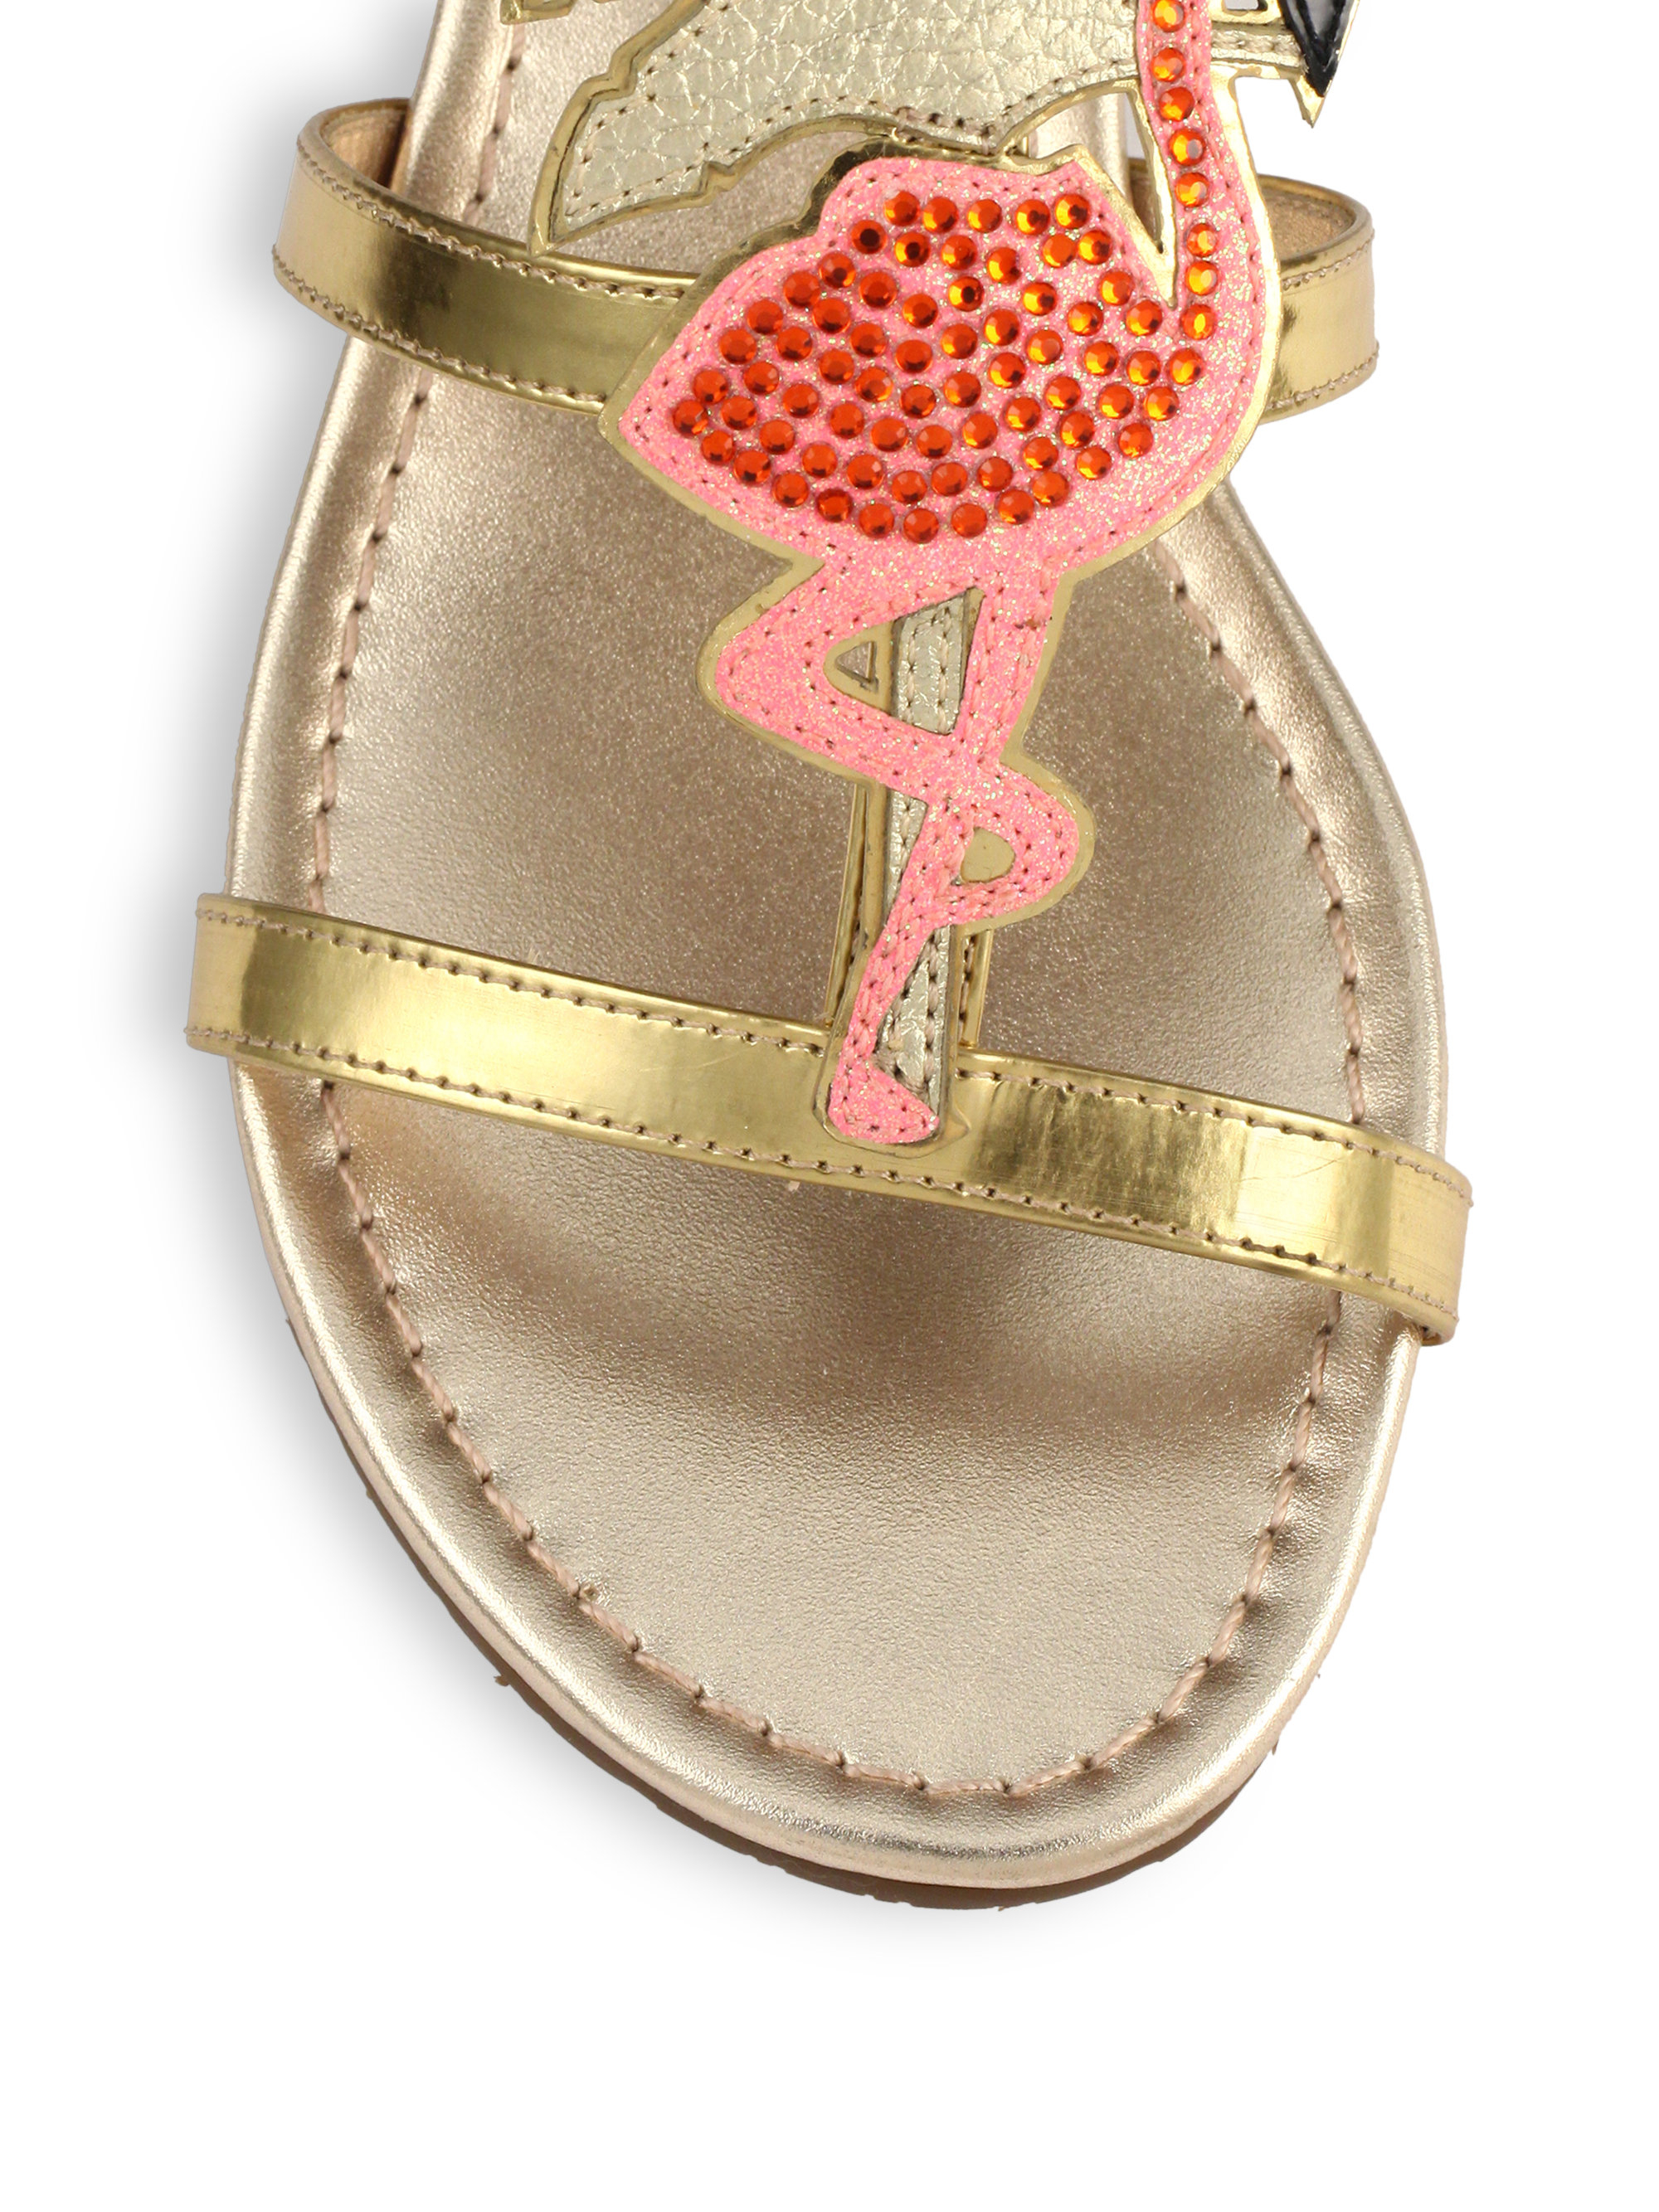 Lyst - Kate Spade New York Tammy Crystal Flamingo-paneled Metallic Leather Sandals in Metallic